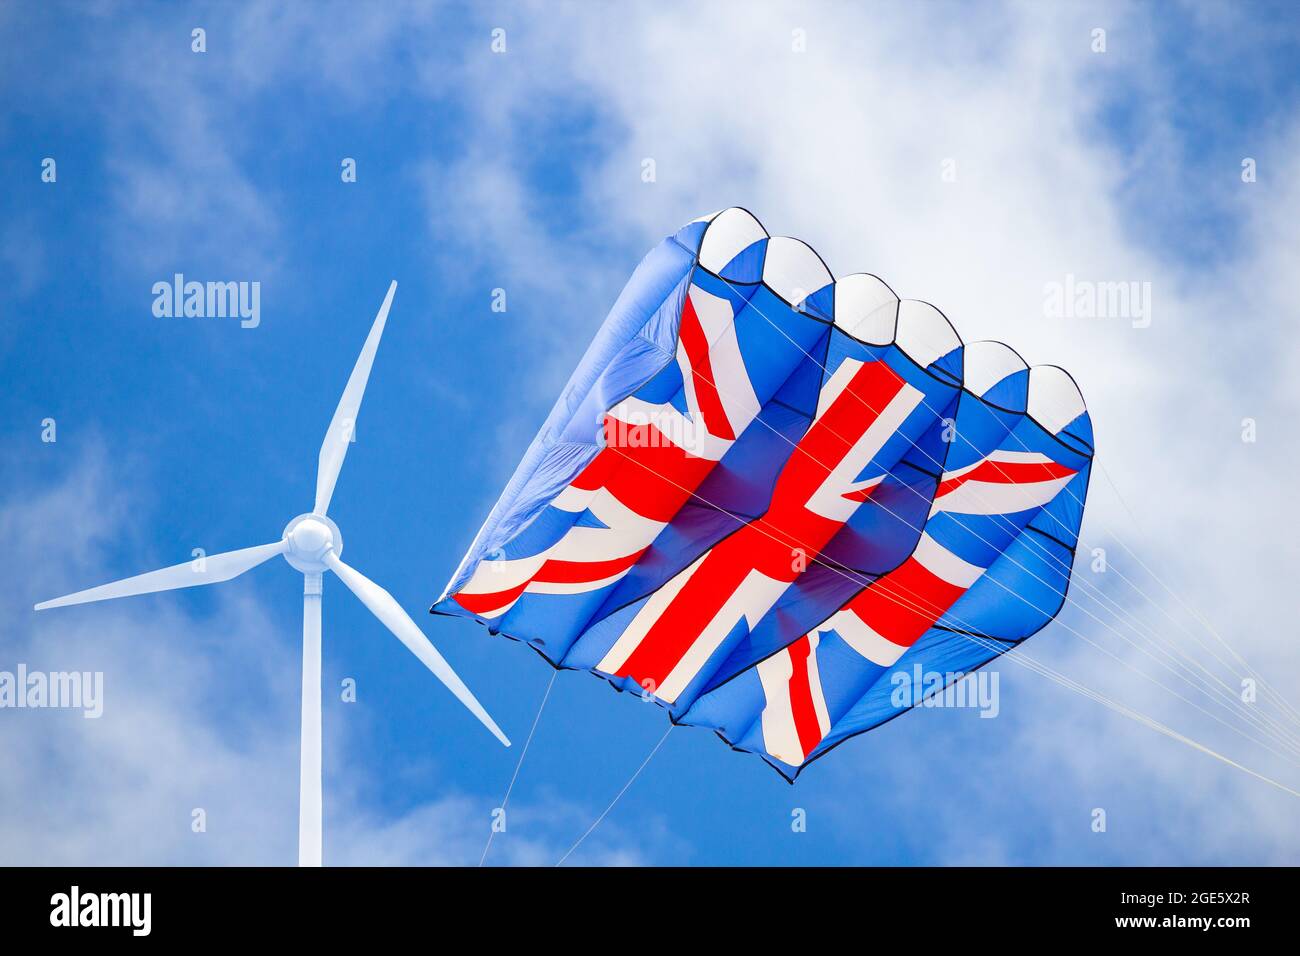 Große UK Union Jack Flagge Kite, blauer Himmel und Windturbinen. Saubere Energie, Windenergie, erneuerbare Energien, Klimawandel, globale Erwärmung.. Konzept Stockfoto